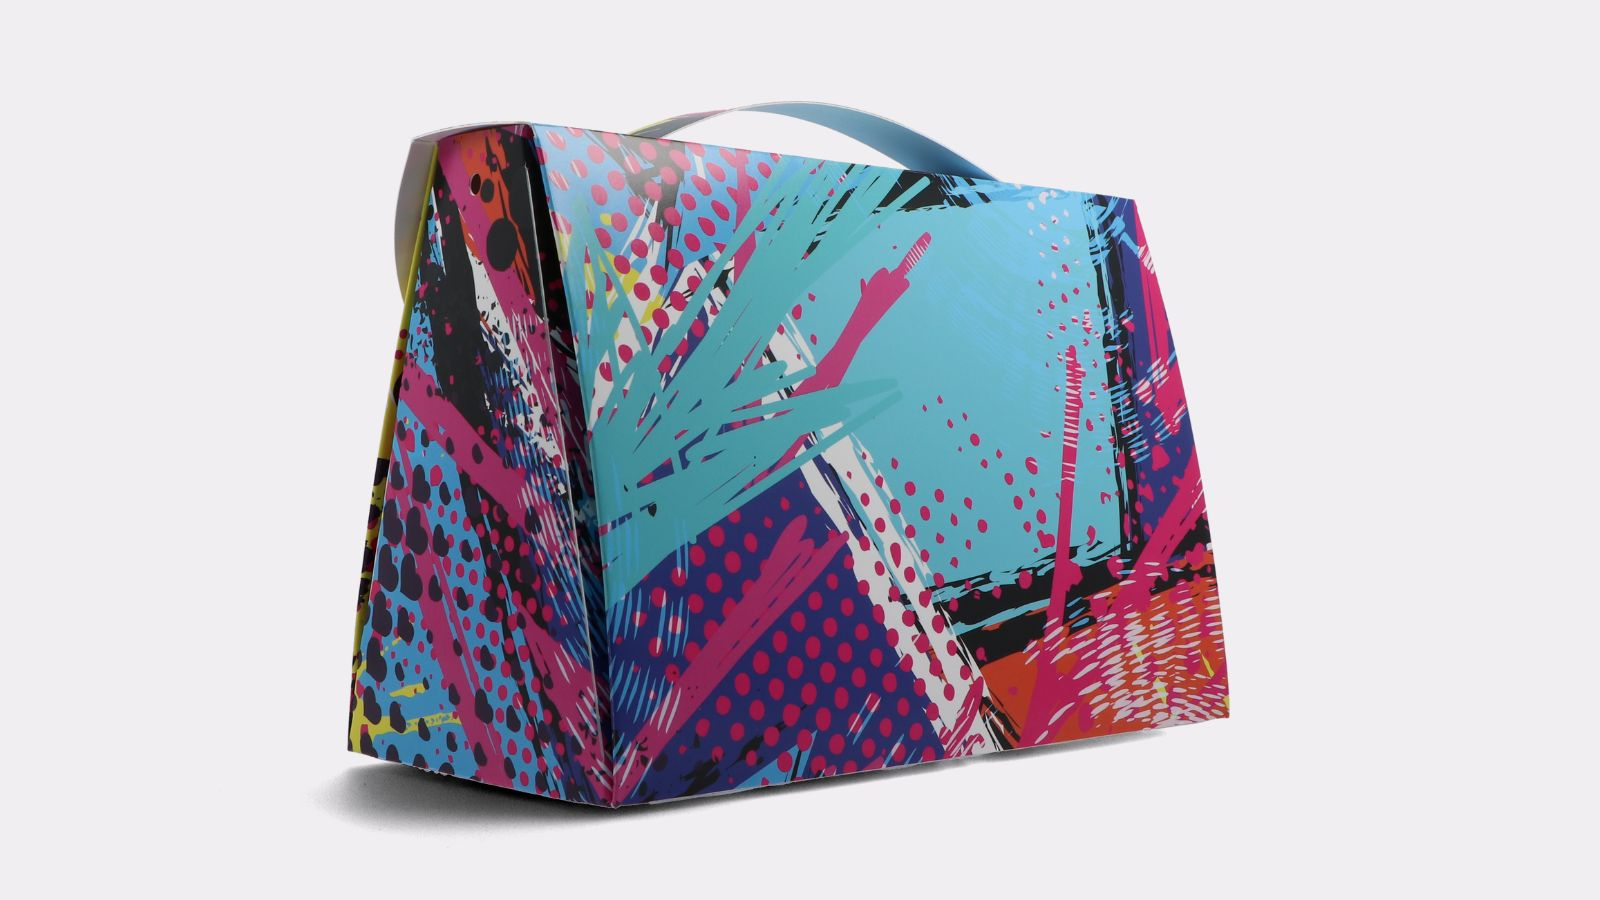 Paper handbag with graffiti design from behind